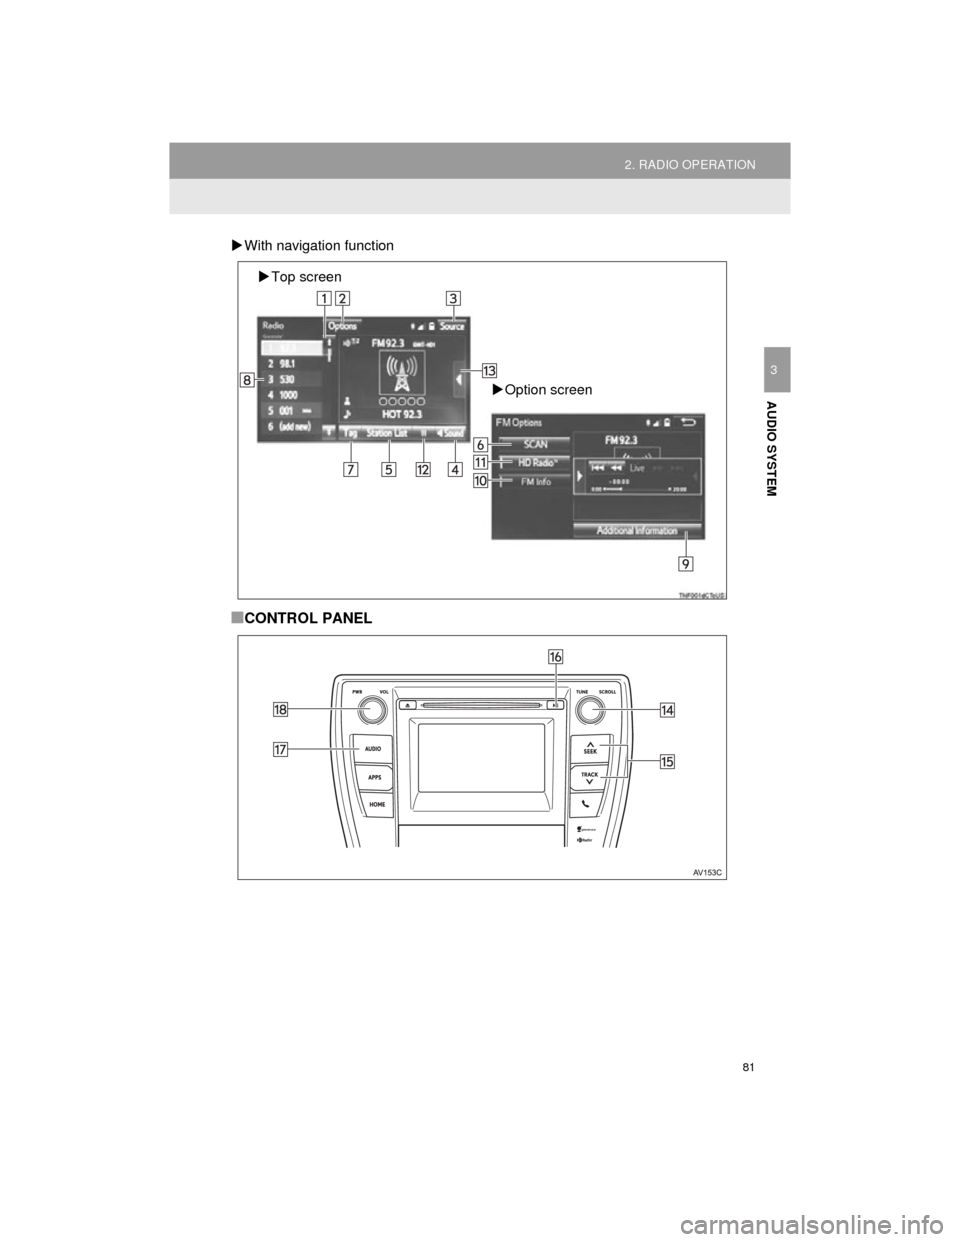 TOYOTA CAMRY 2015 XV50 / 9.G Navigation Manual 81
2. RADIO OPERATION
Camry_Navi_U
AUDIO SYSTEM
3
With navigation function
■CONTROL PANEL
Top screen
Option screen 